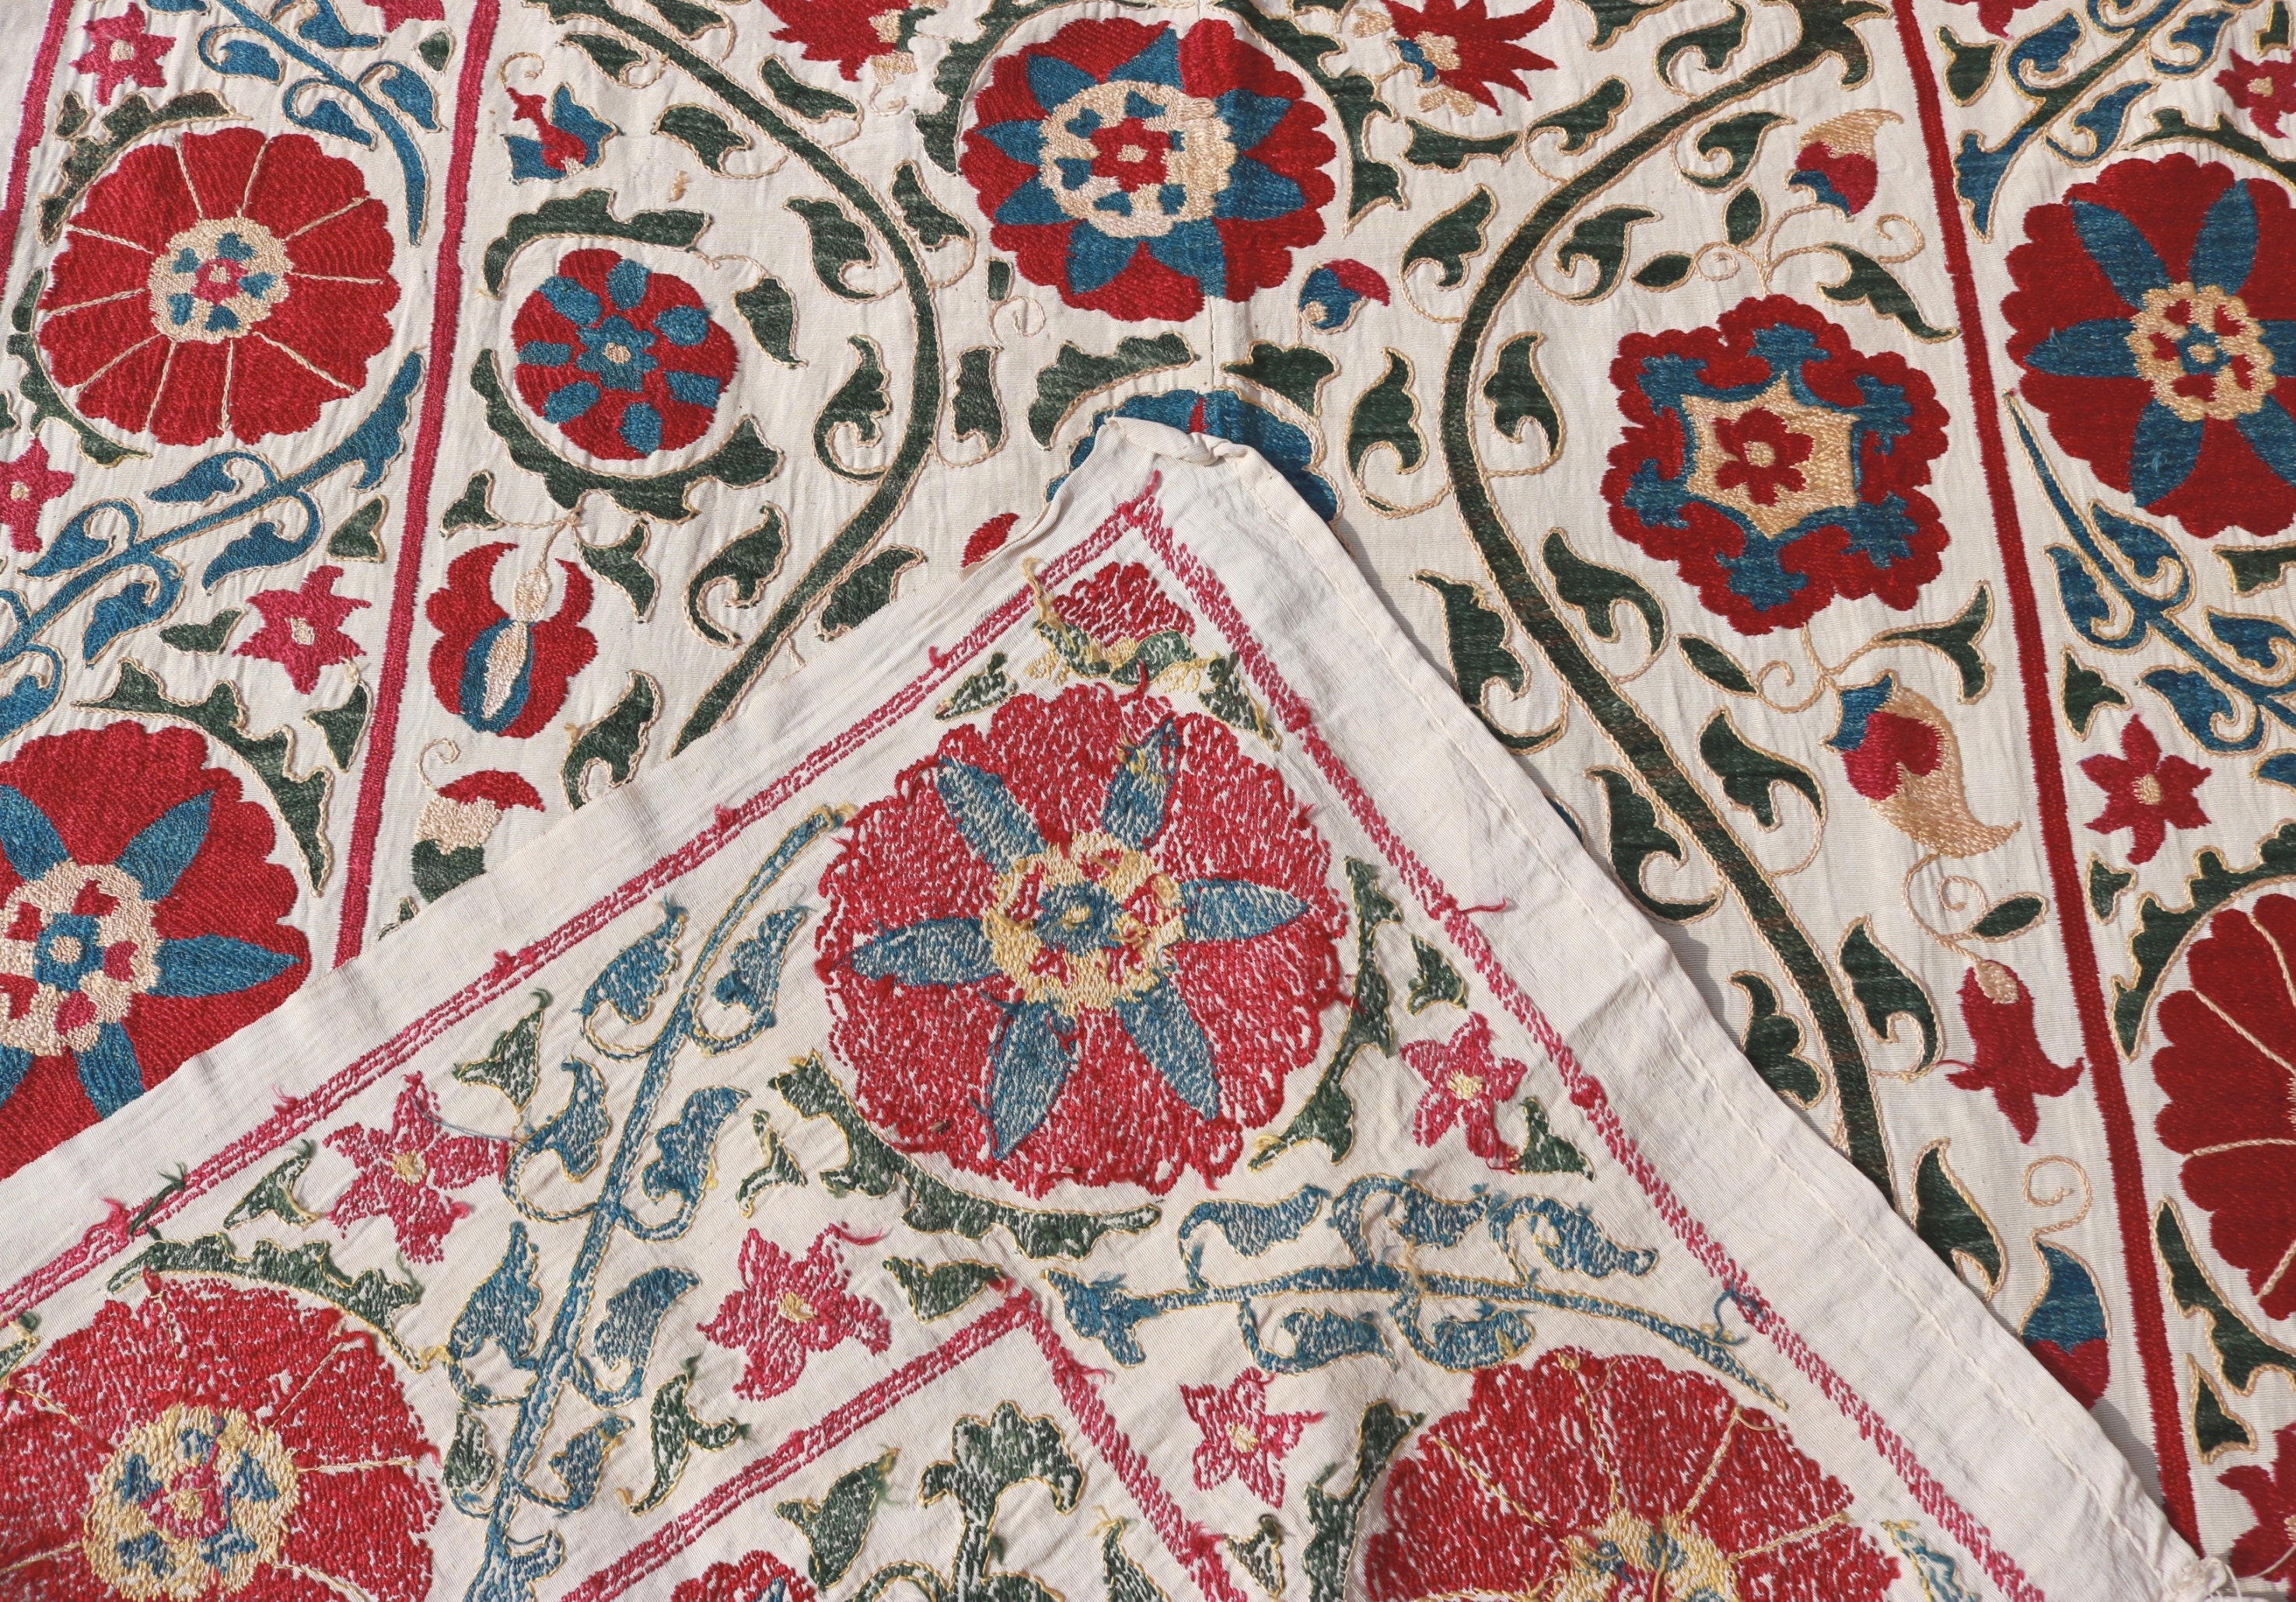 Suzani Bukhara Uzbek Handmade Embroidery Bedspread Bedcover Etsy